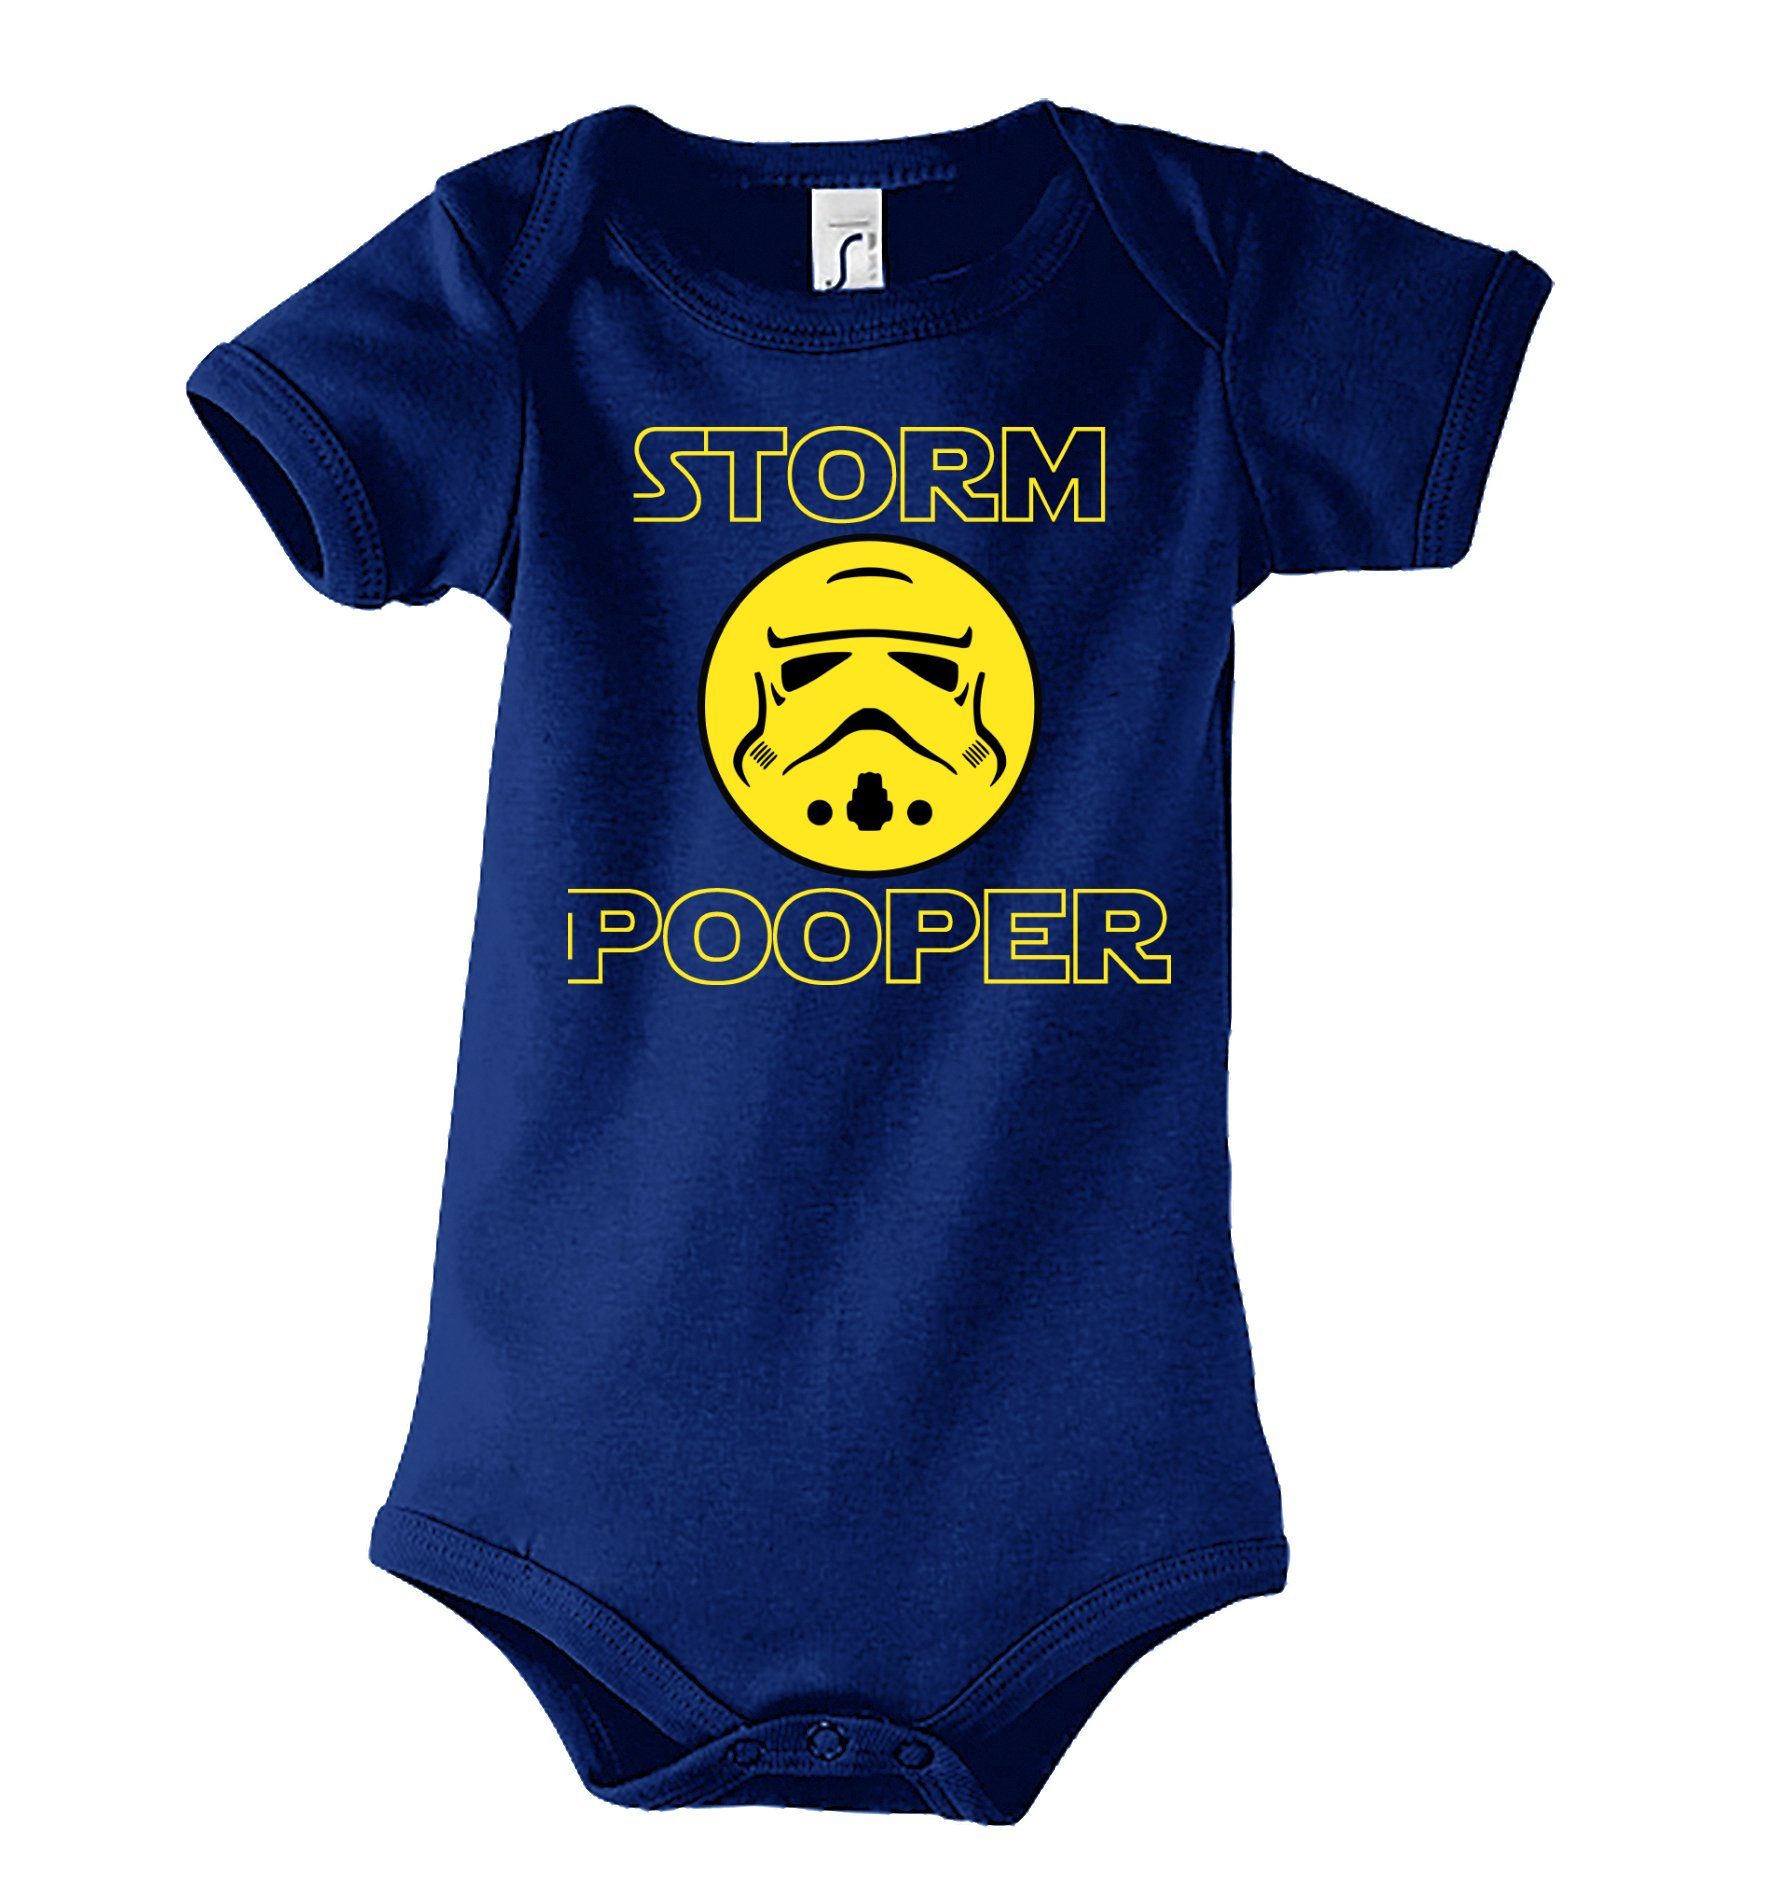 Youth Designz Kurzarmbody Storm Pooper Trooper Baby Body Kurzarm Strampler mit lustigem Spruch & Logo Print Navyblau | Shirtbodies